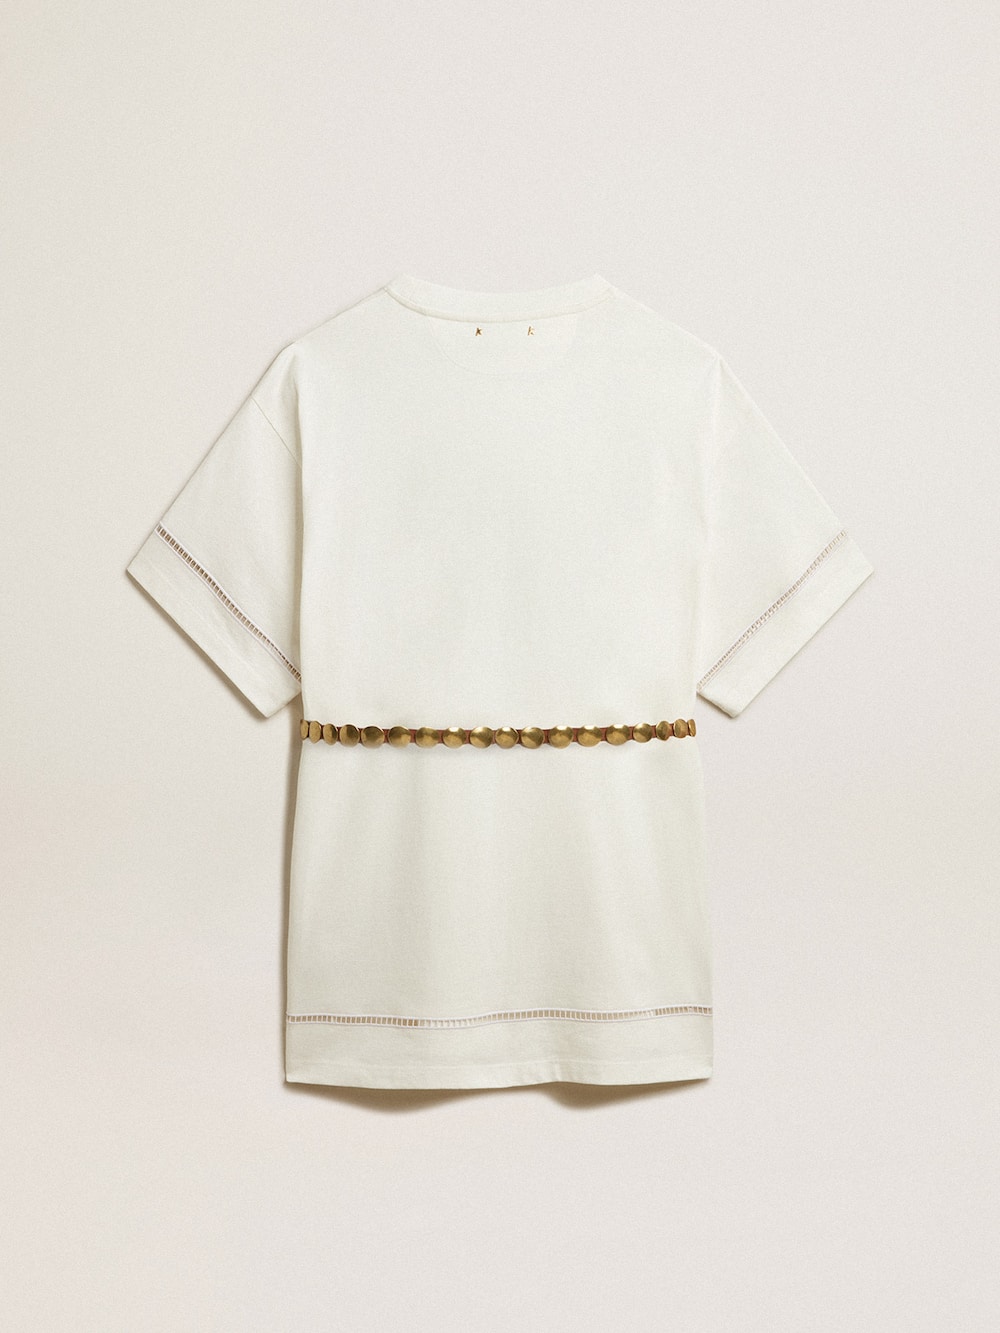 Golden Goose - Vestito t-shirt in cotone color bianco con cintura in 